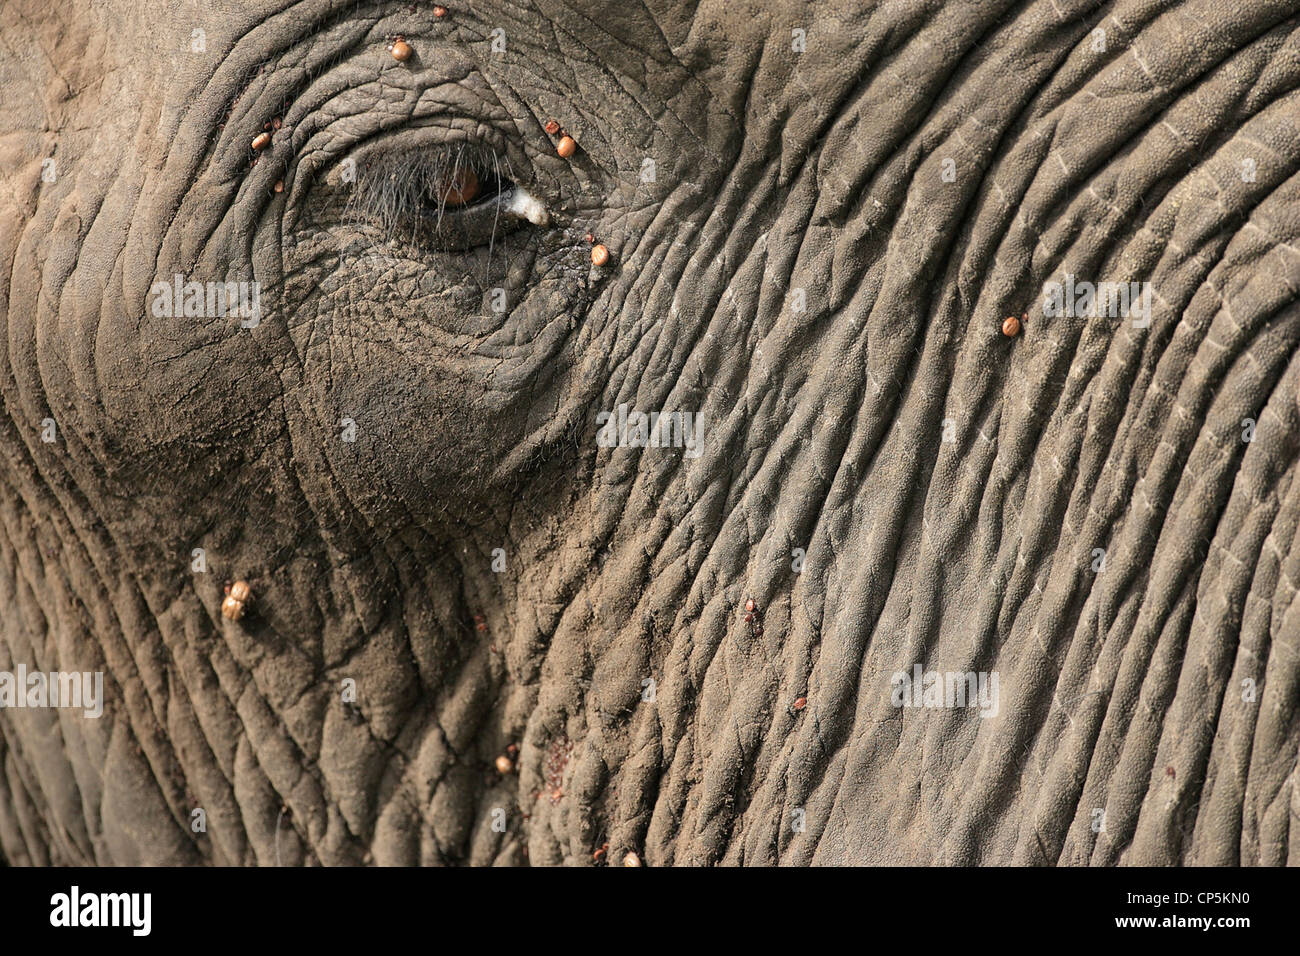 Close-up of Elephant eye with ticks on skin Stock Photo